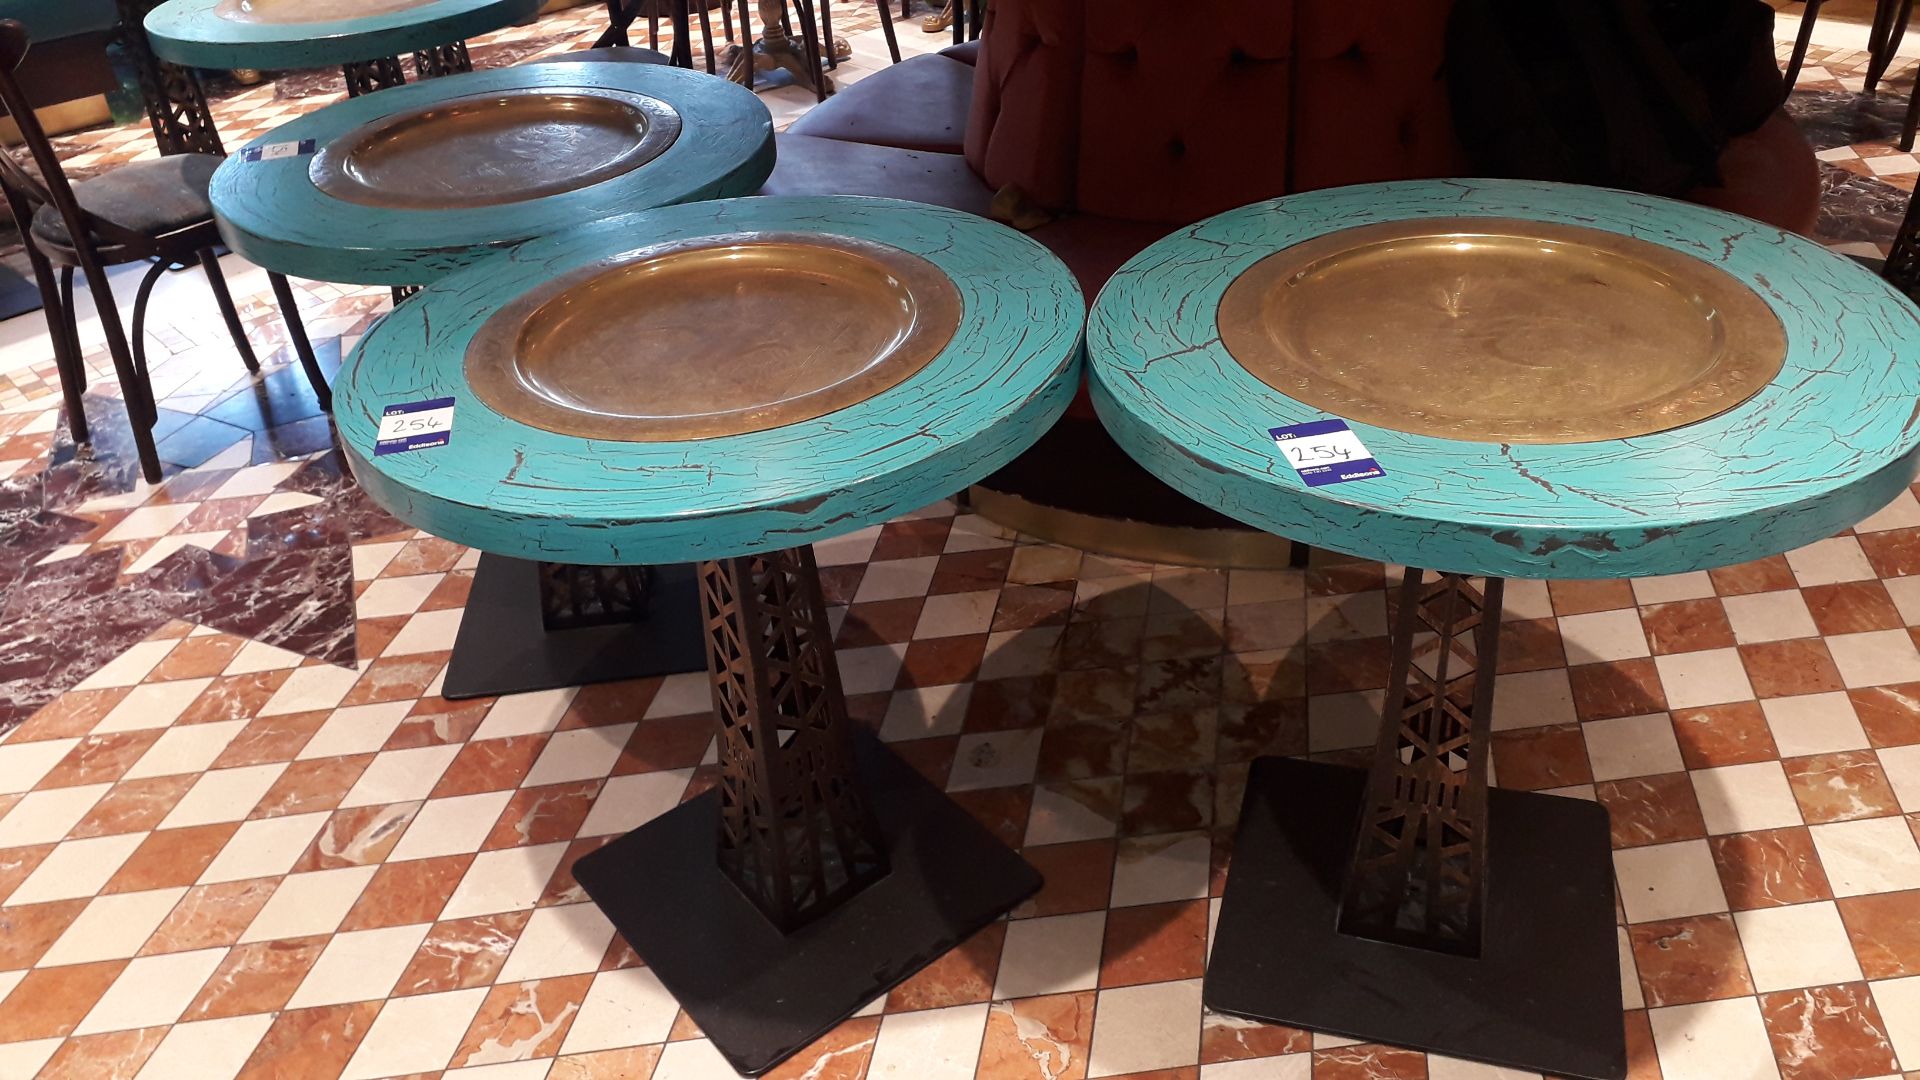 3 x Circular Painted Pedestal Tables with Brass Tray & Pierced Pedestal Base 75cm Diameter,